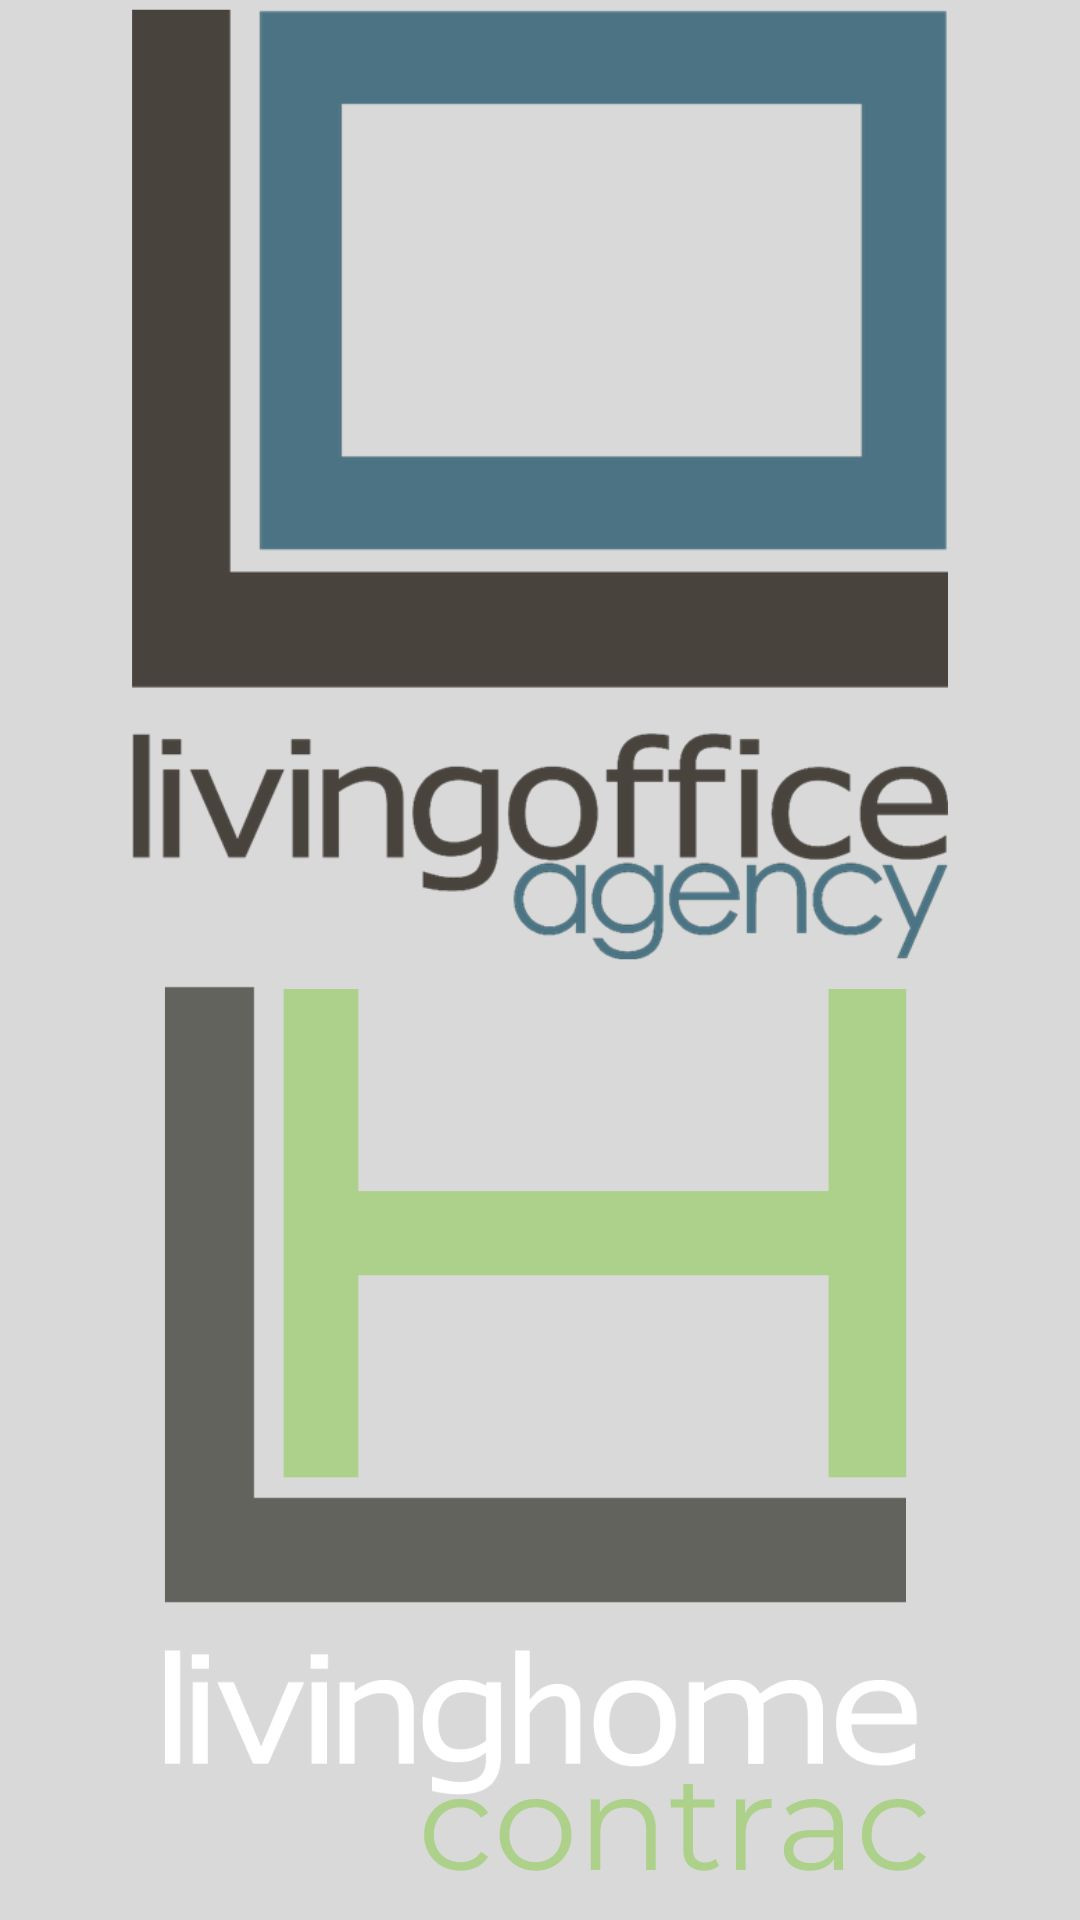 LIVINGOFFICE Agency